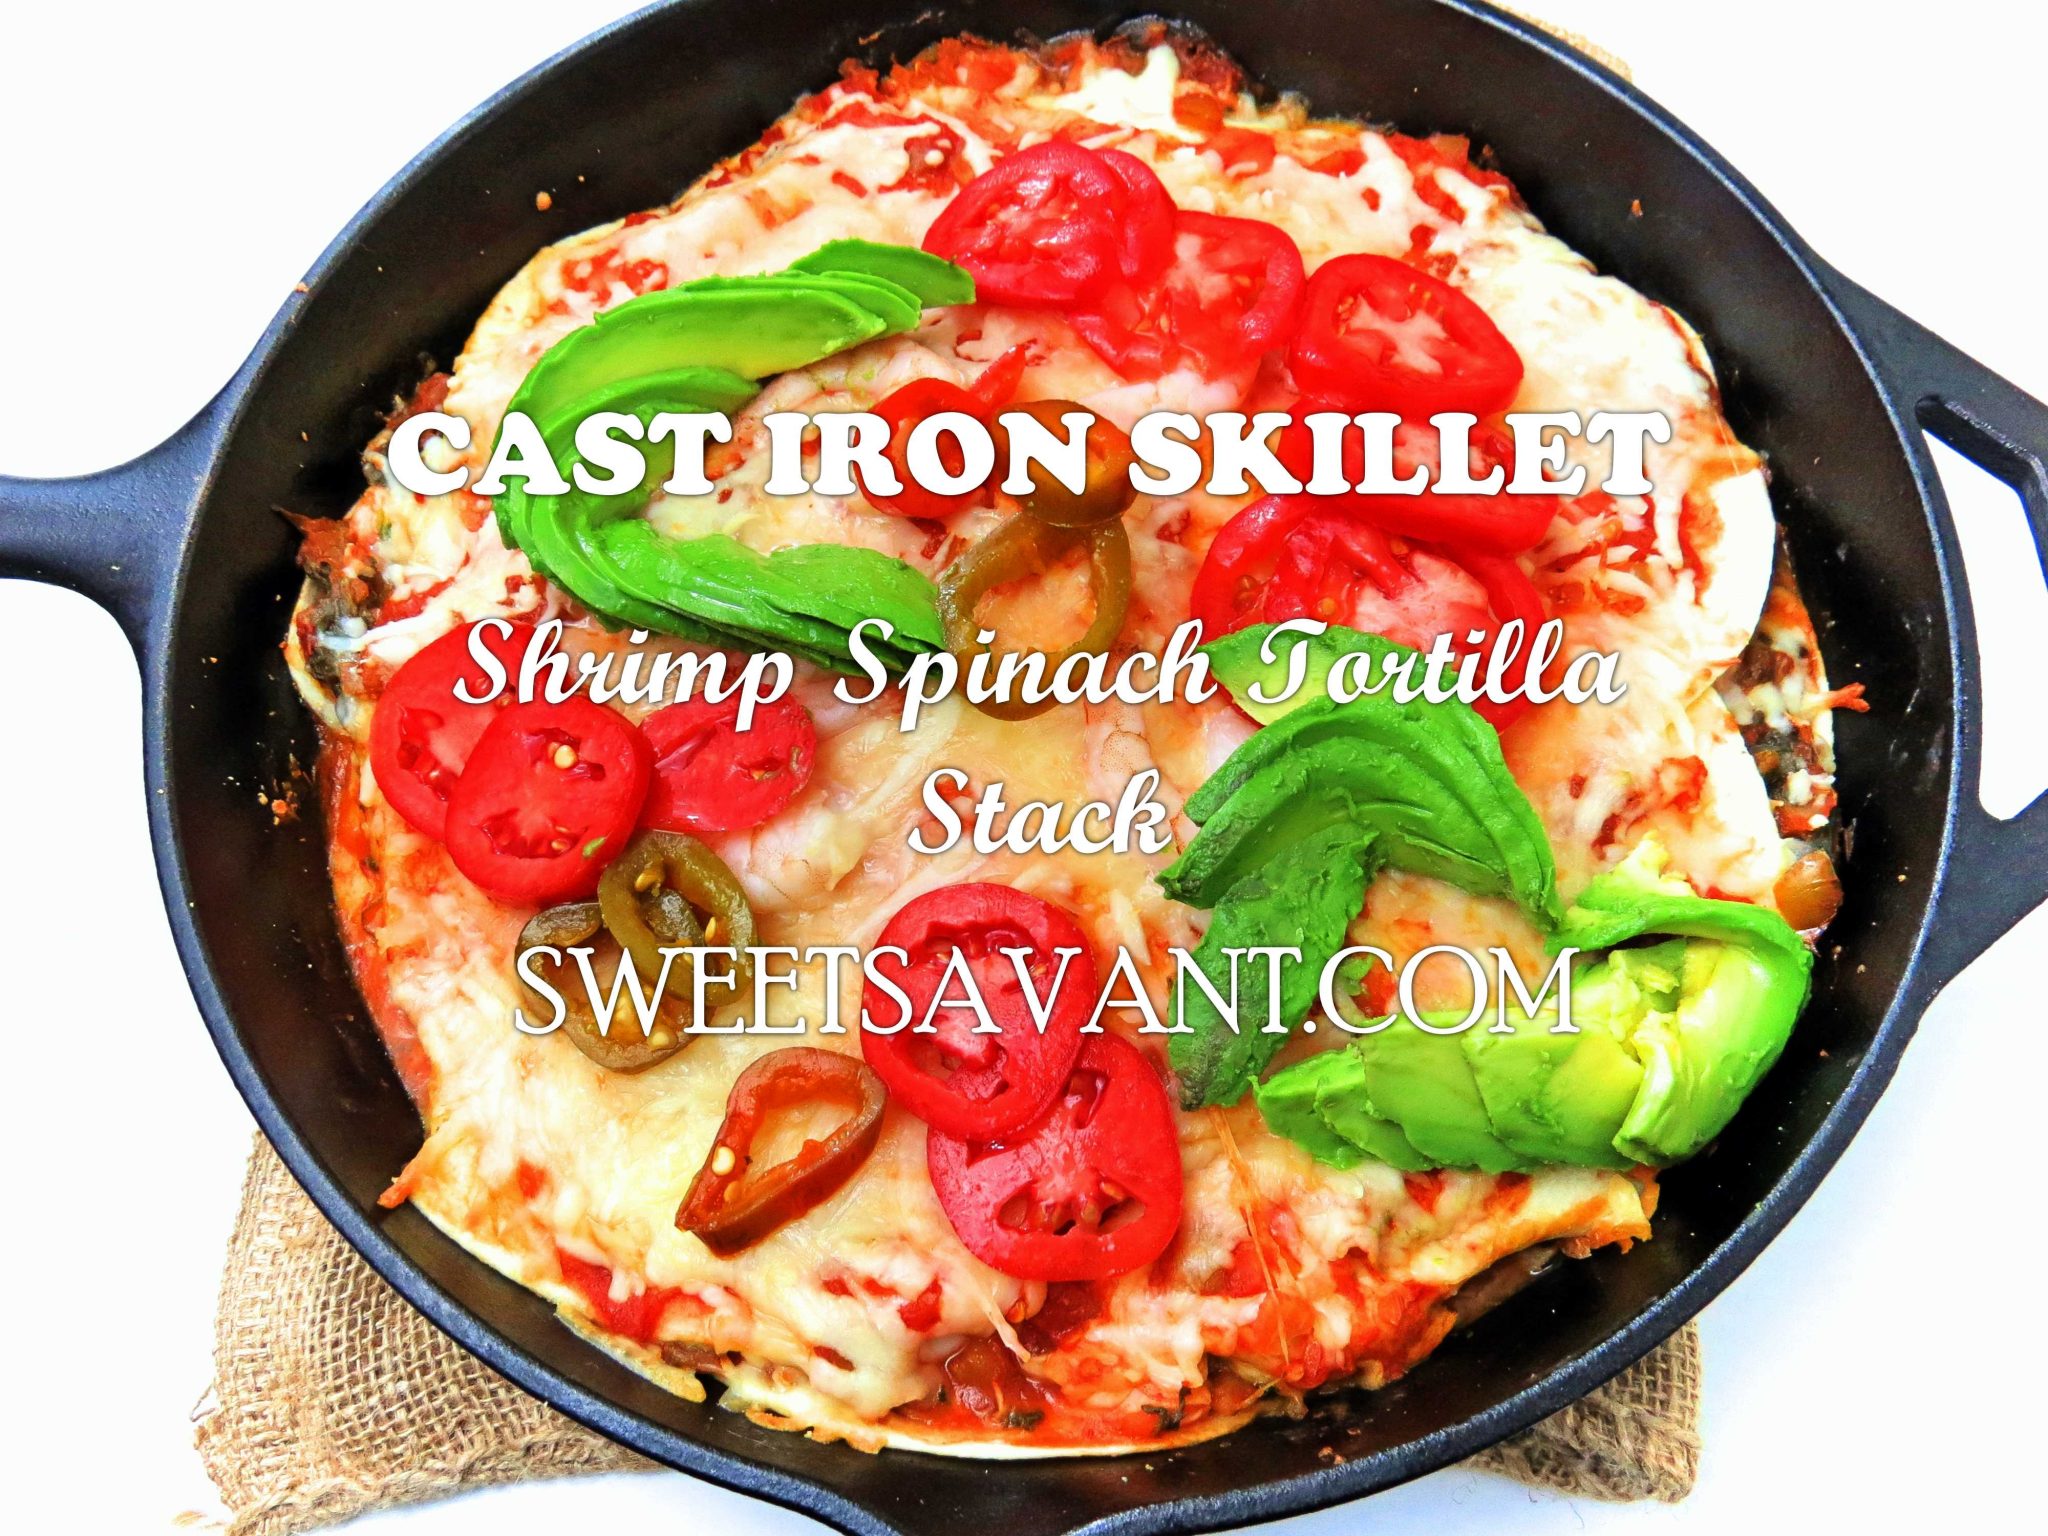 https://sweetsavant.com/wp-content/uploads/2016/09/cast-iron-skillet-shrimp-spinach-tortilla-stack-text.jpg